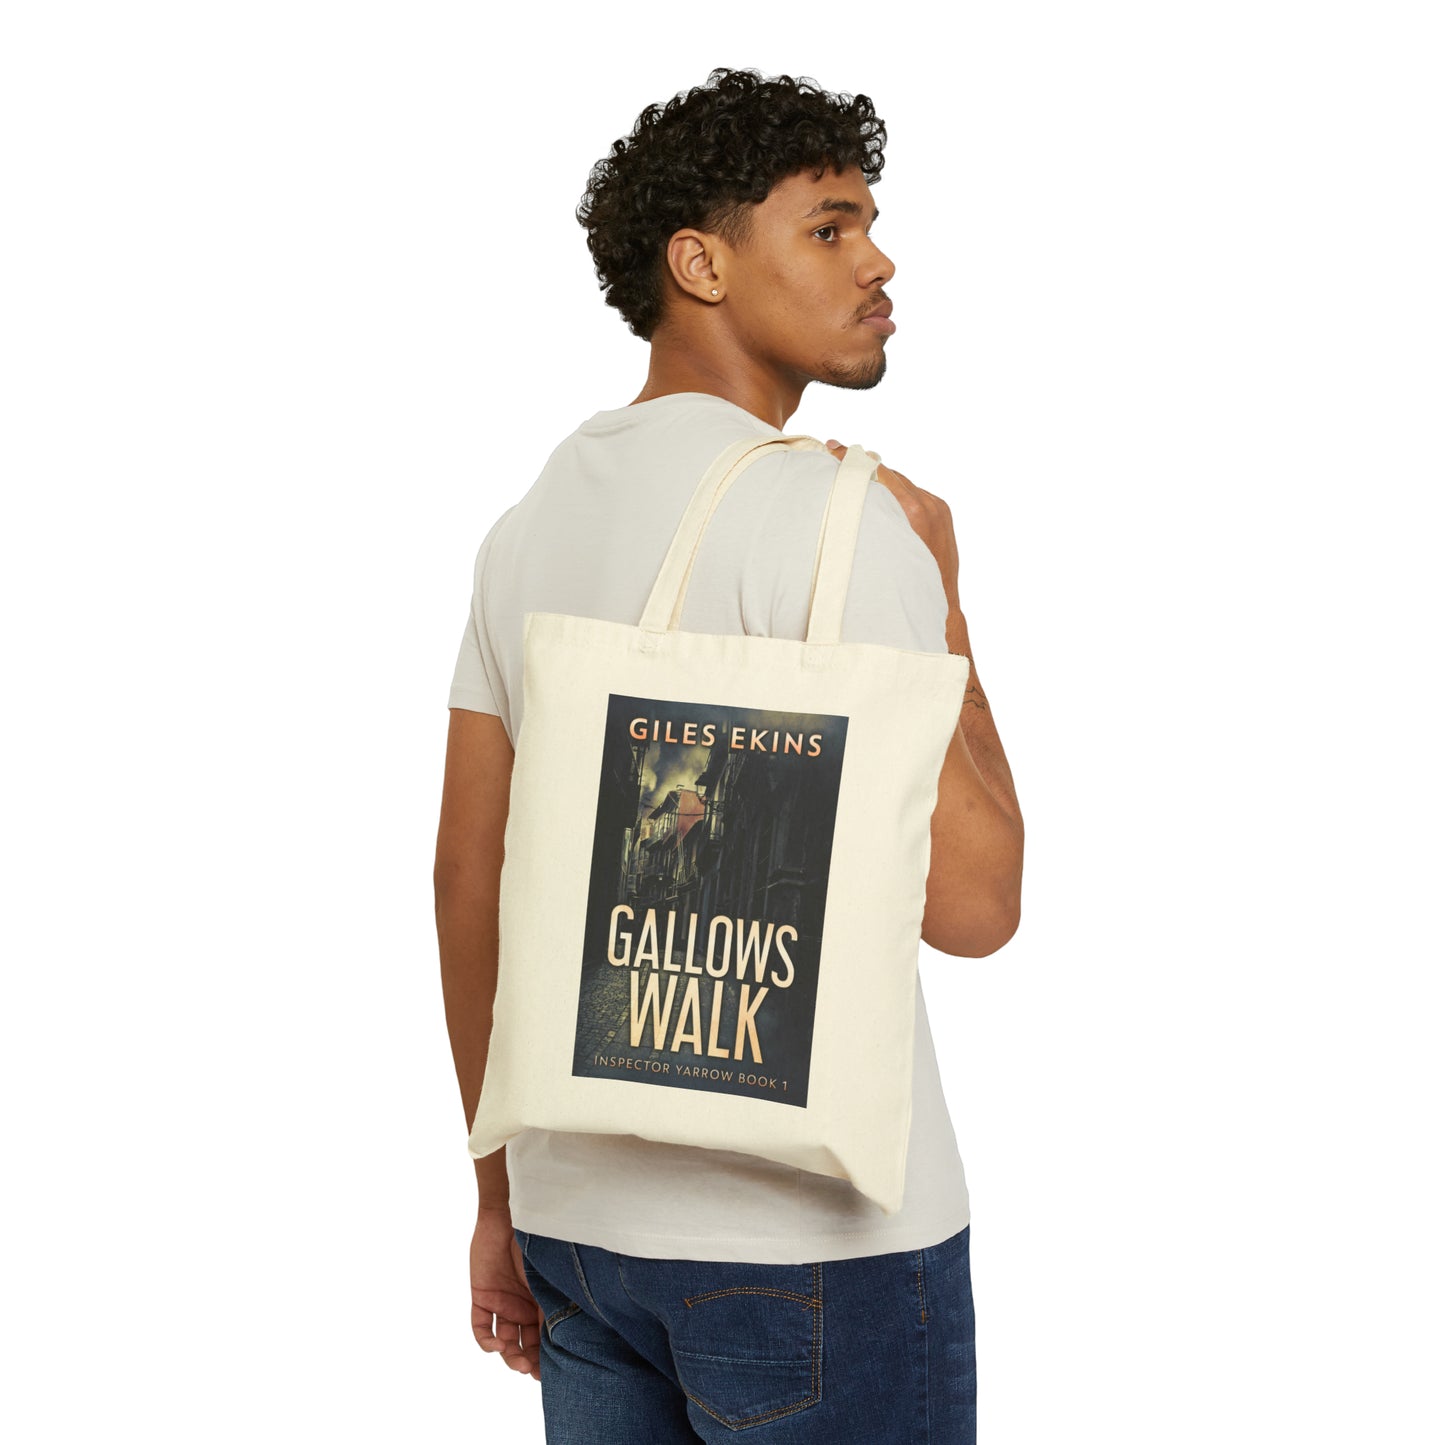 Gallows Walk - Cotton Canvas Tote Bag